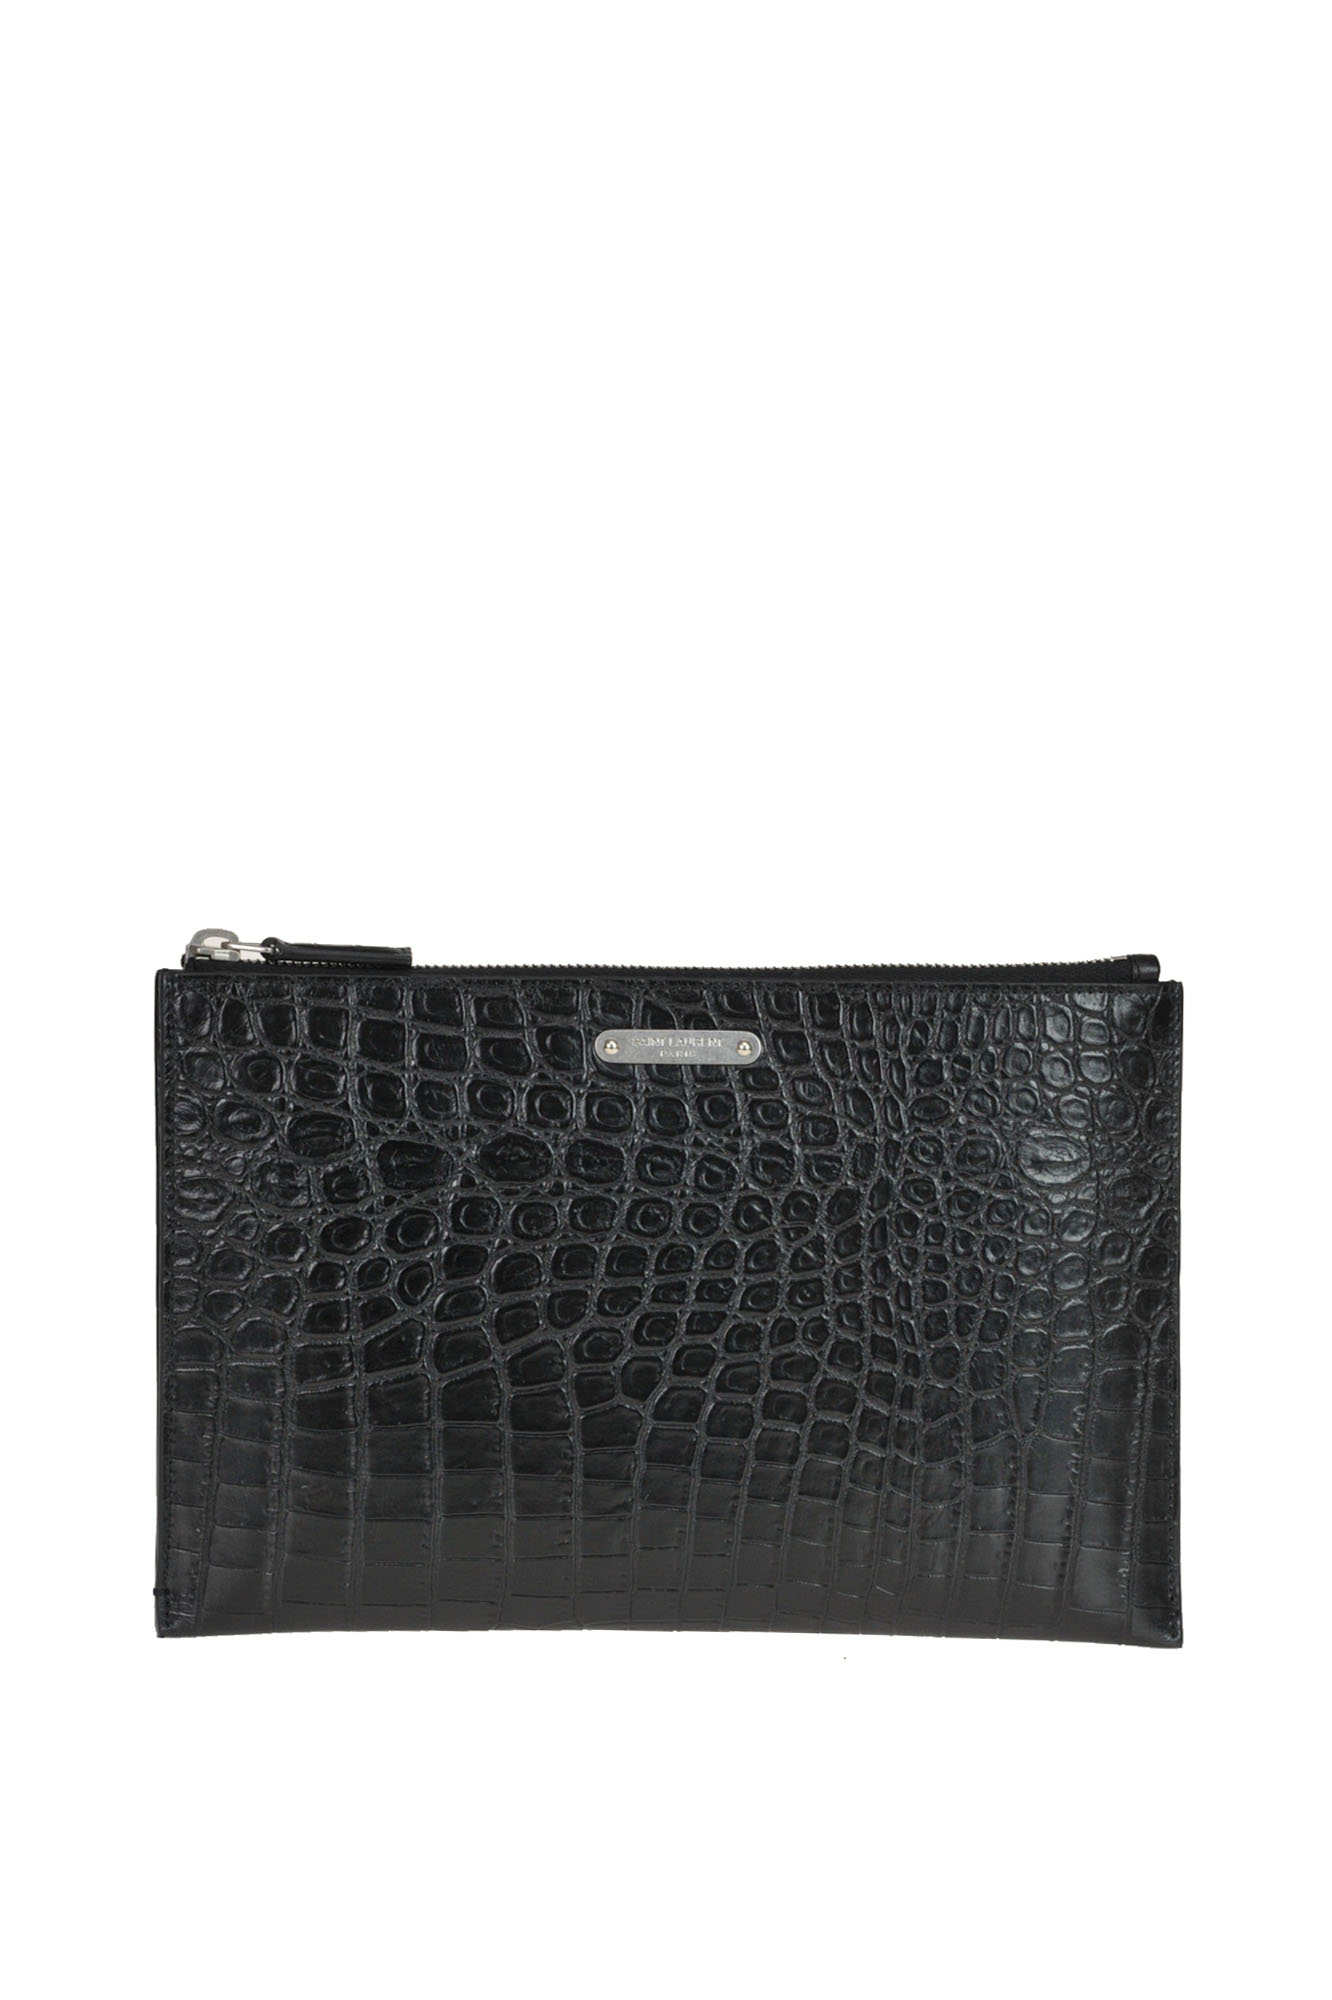 Saint Laurent Crocodile Print Leather Tablet Holder In Black